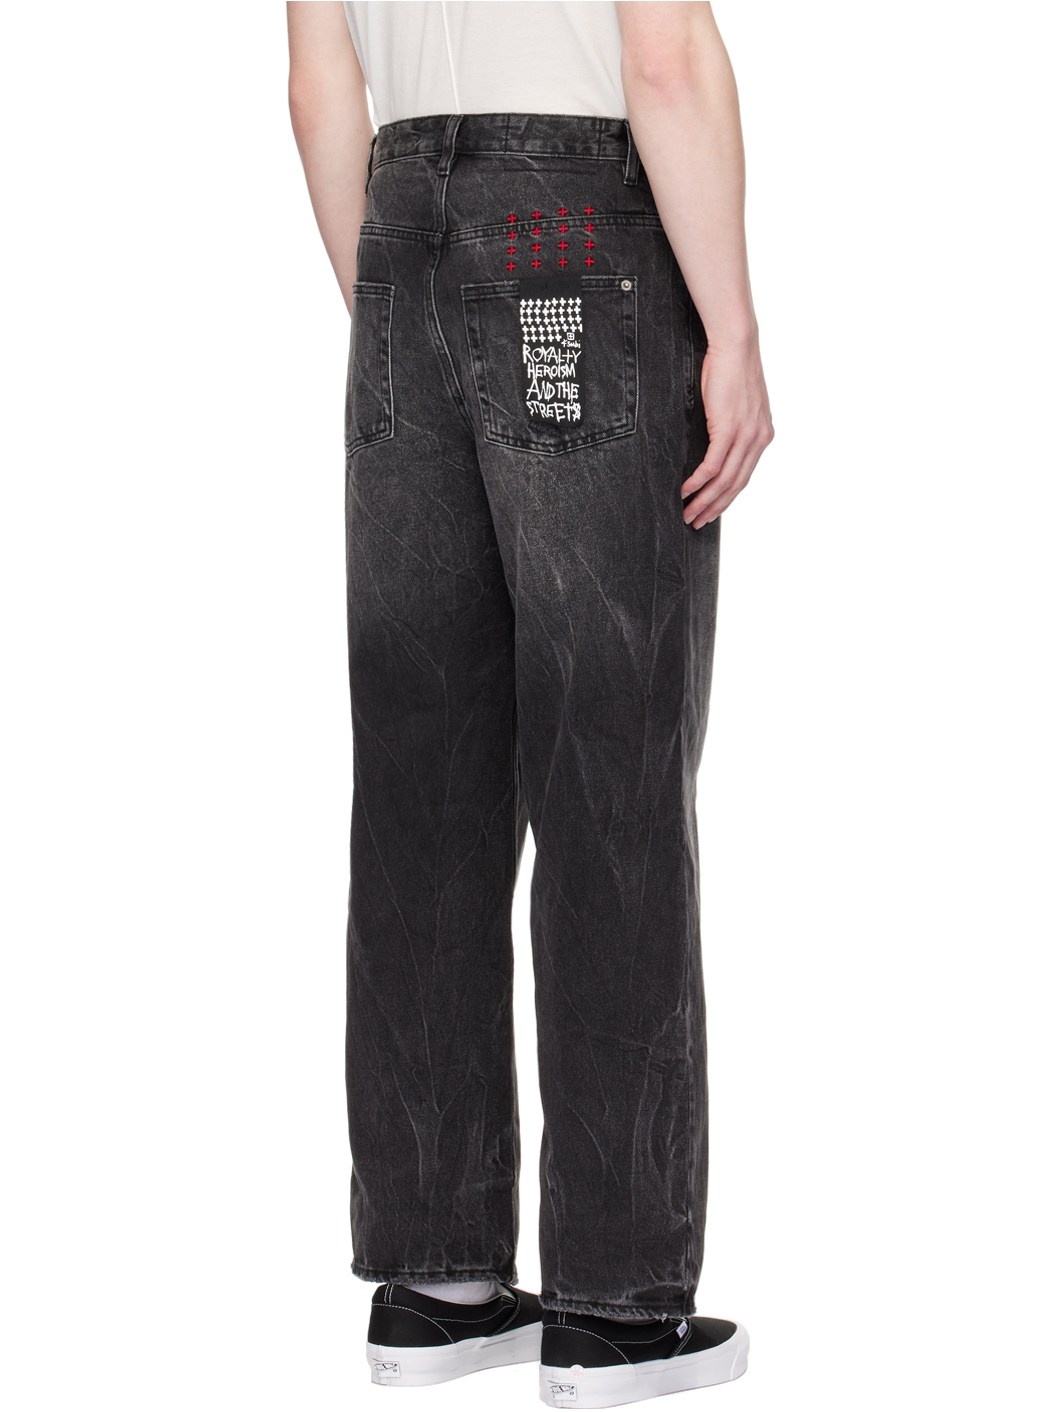 Black Maxx Conspiracy Jeans - 3